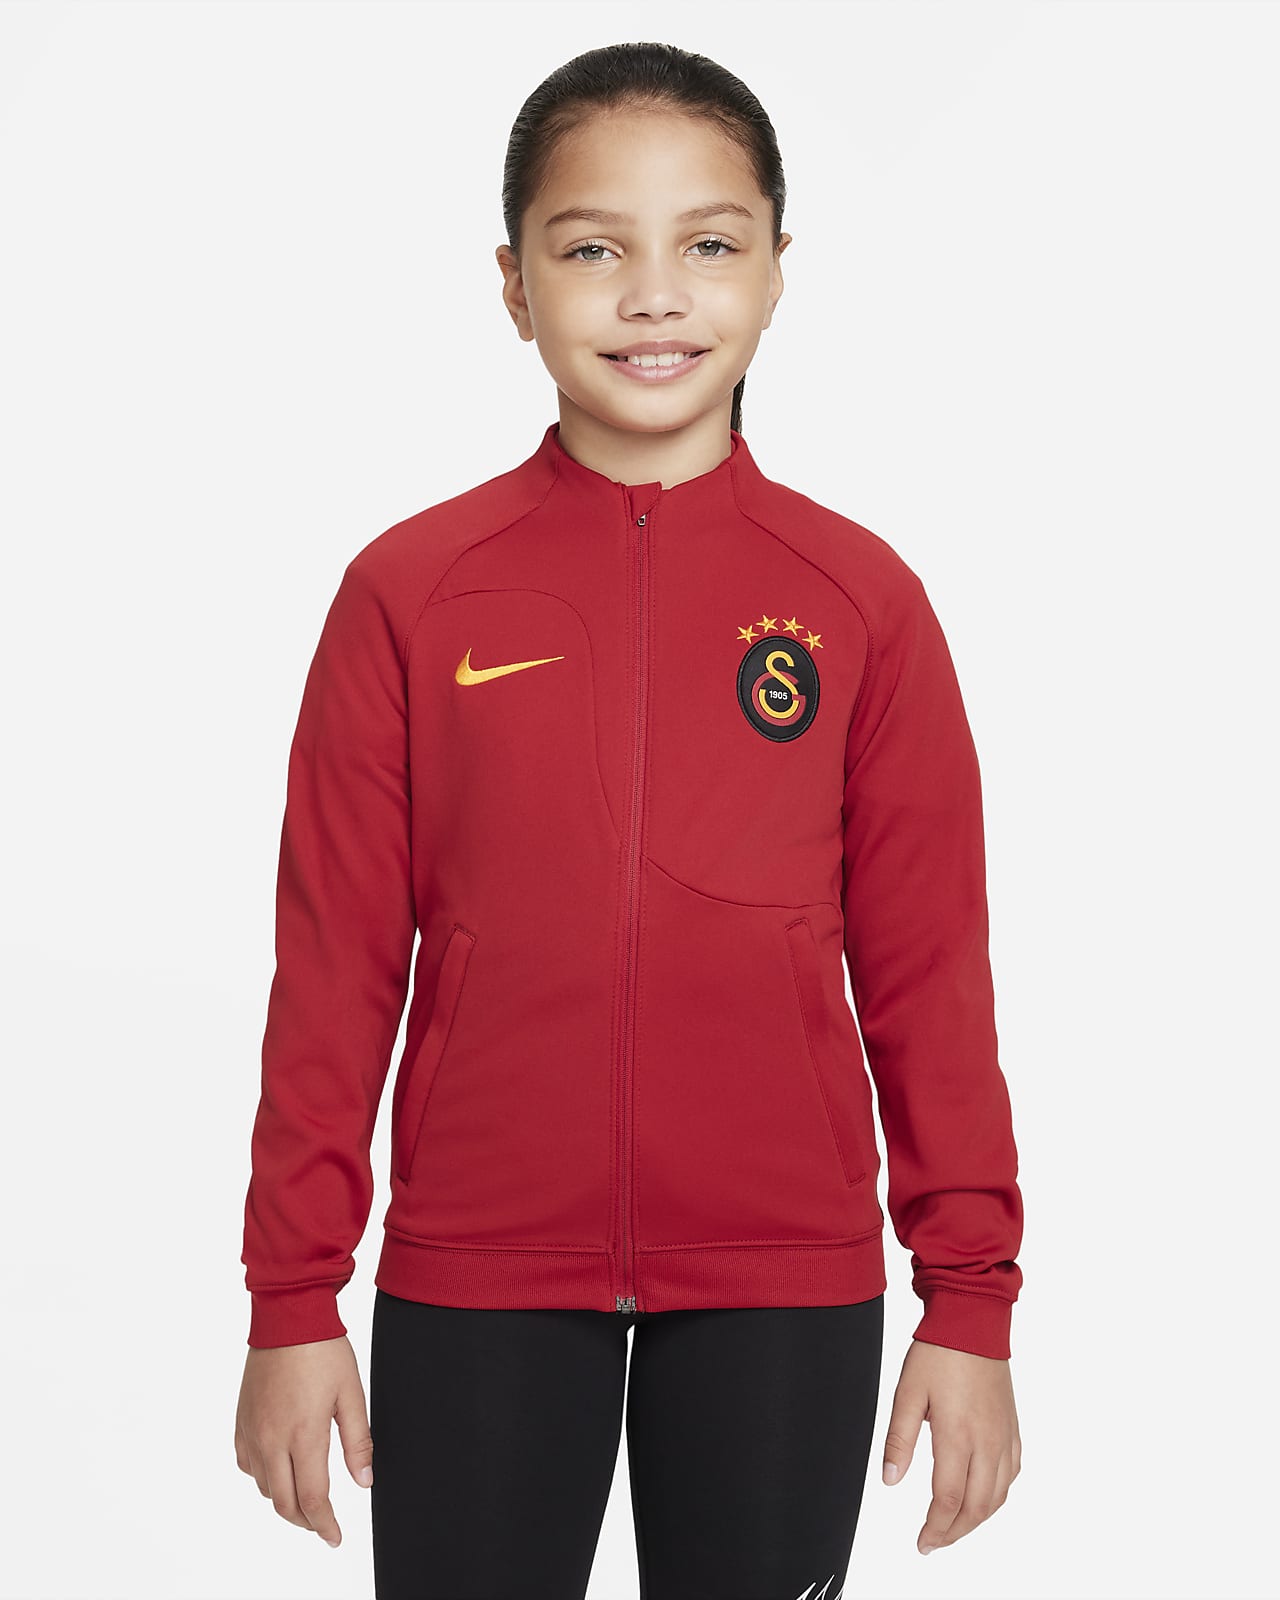 Galatasaray Academy Pro Jaqueta Nike de futbol - Nen/a